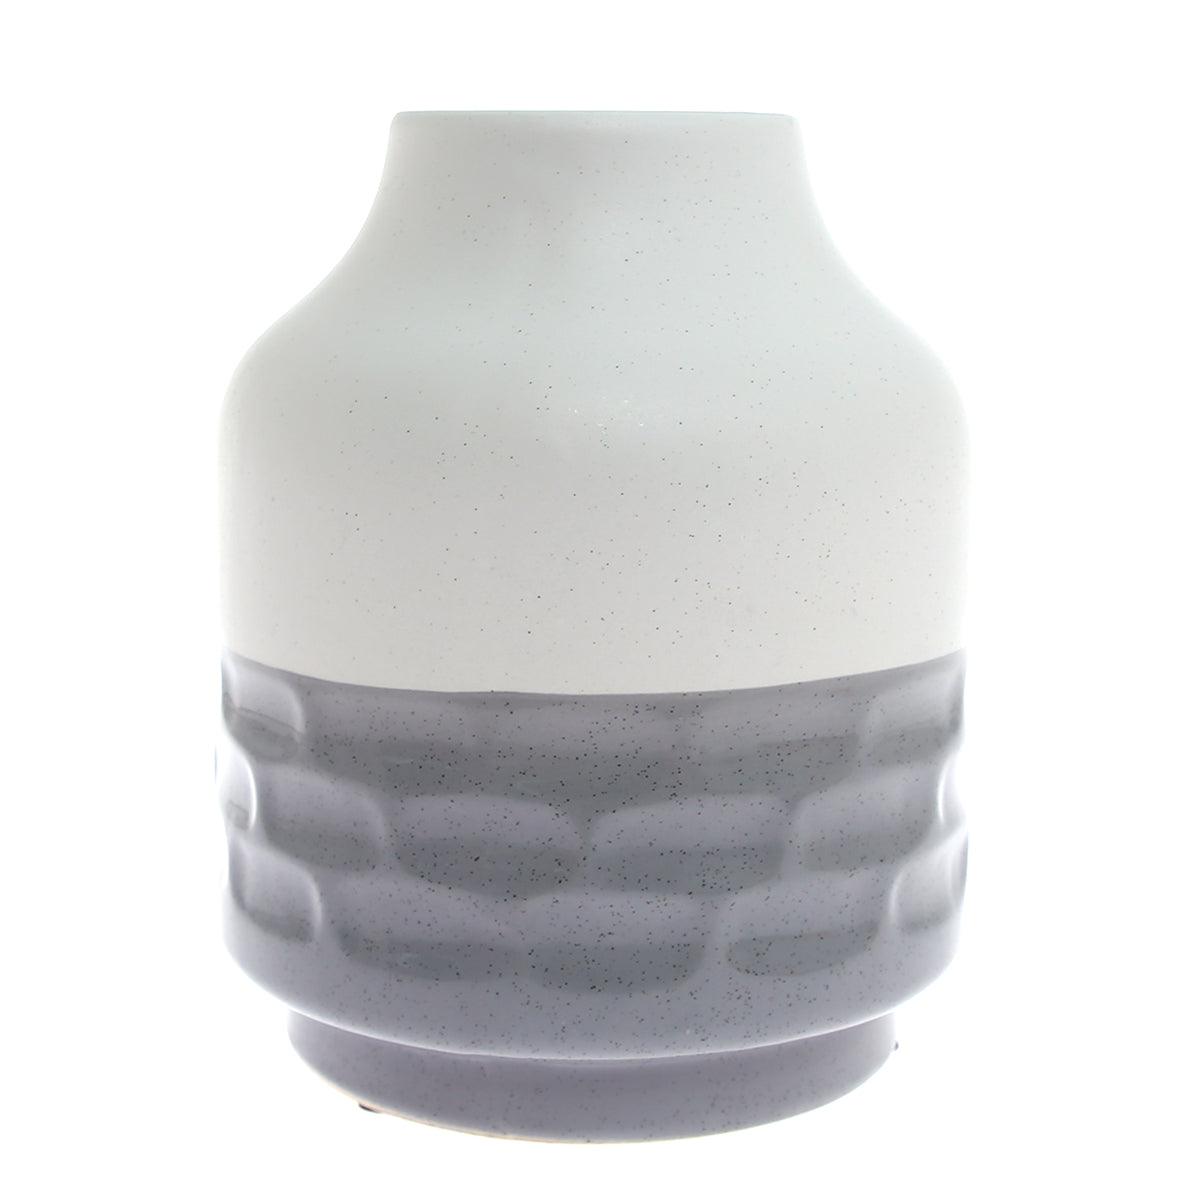 .Ceramic..16.5x16.5x20.5.HY1926